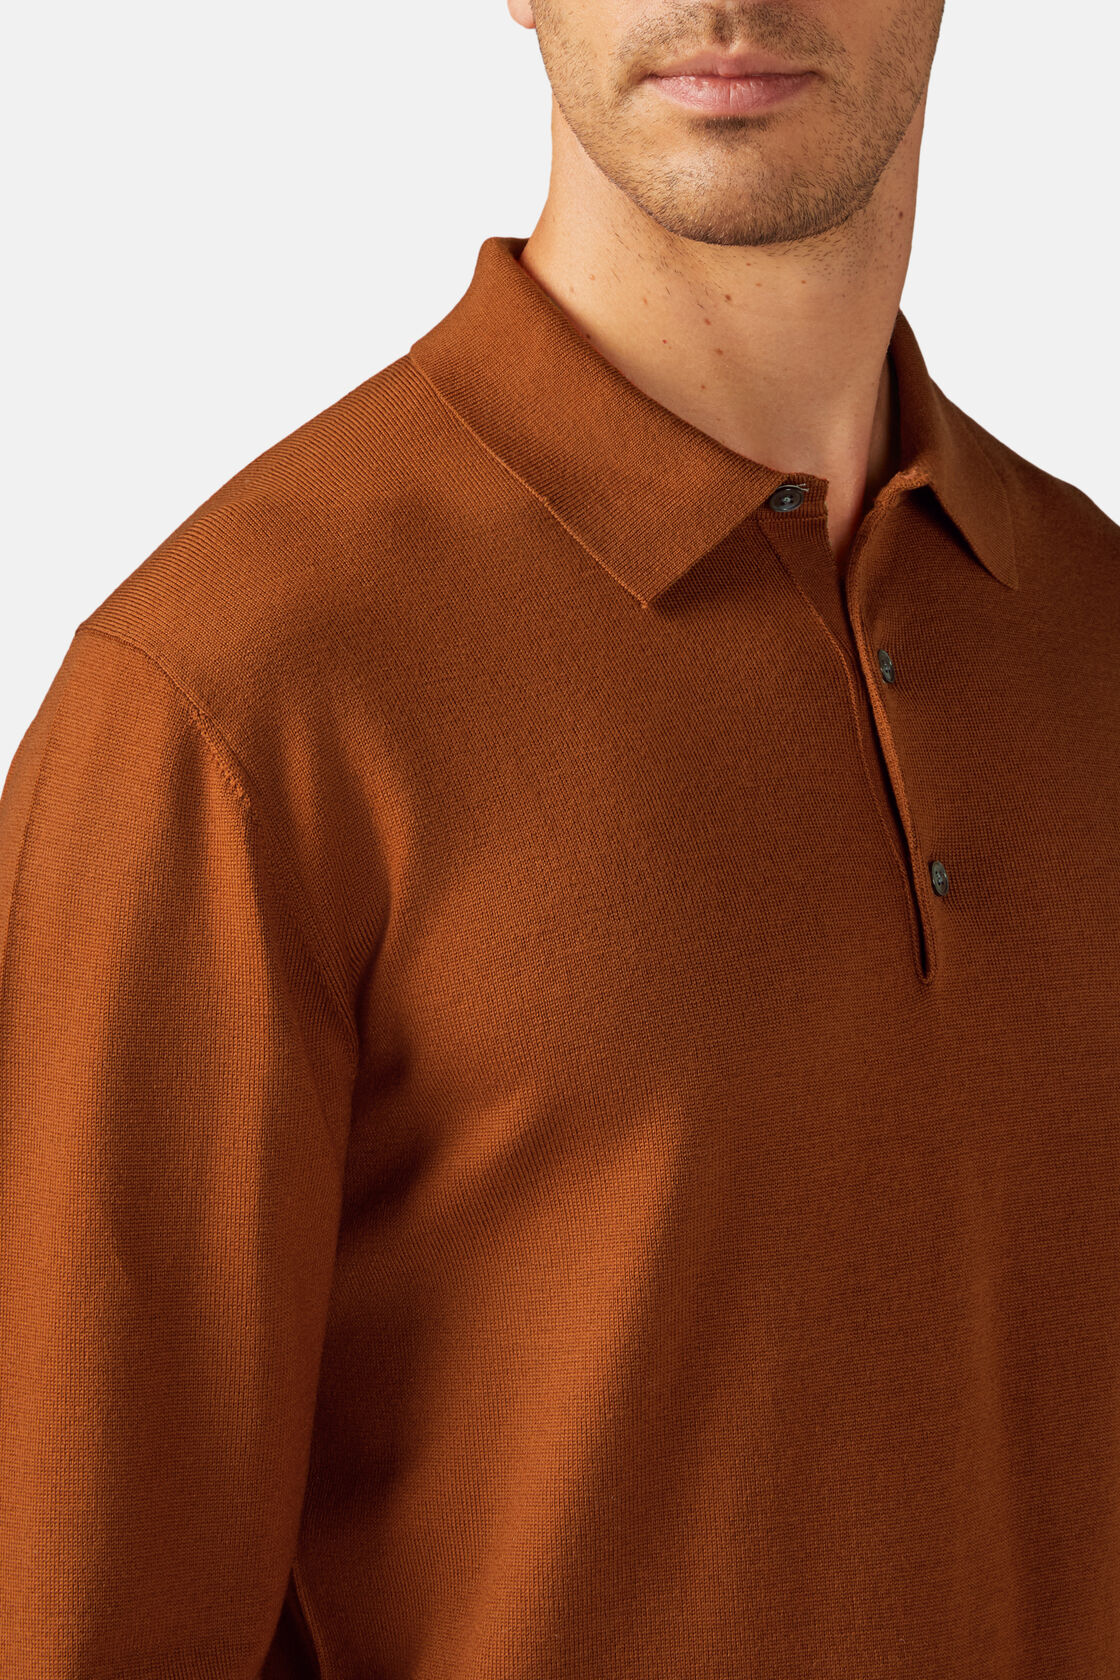 Orange Merino Wool Knitted Polo Shirt, , hi-res